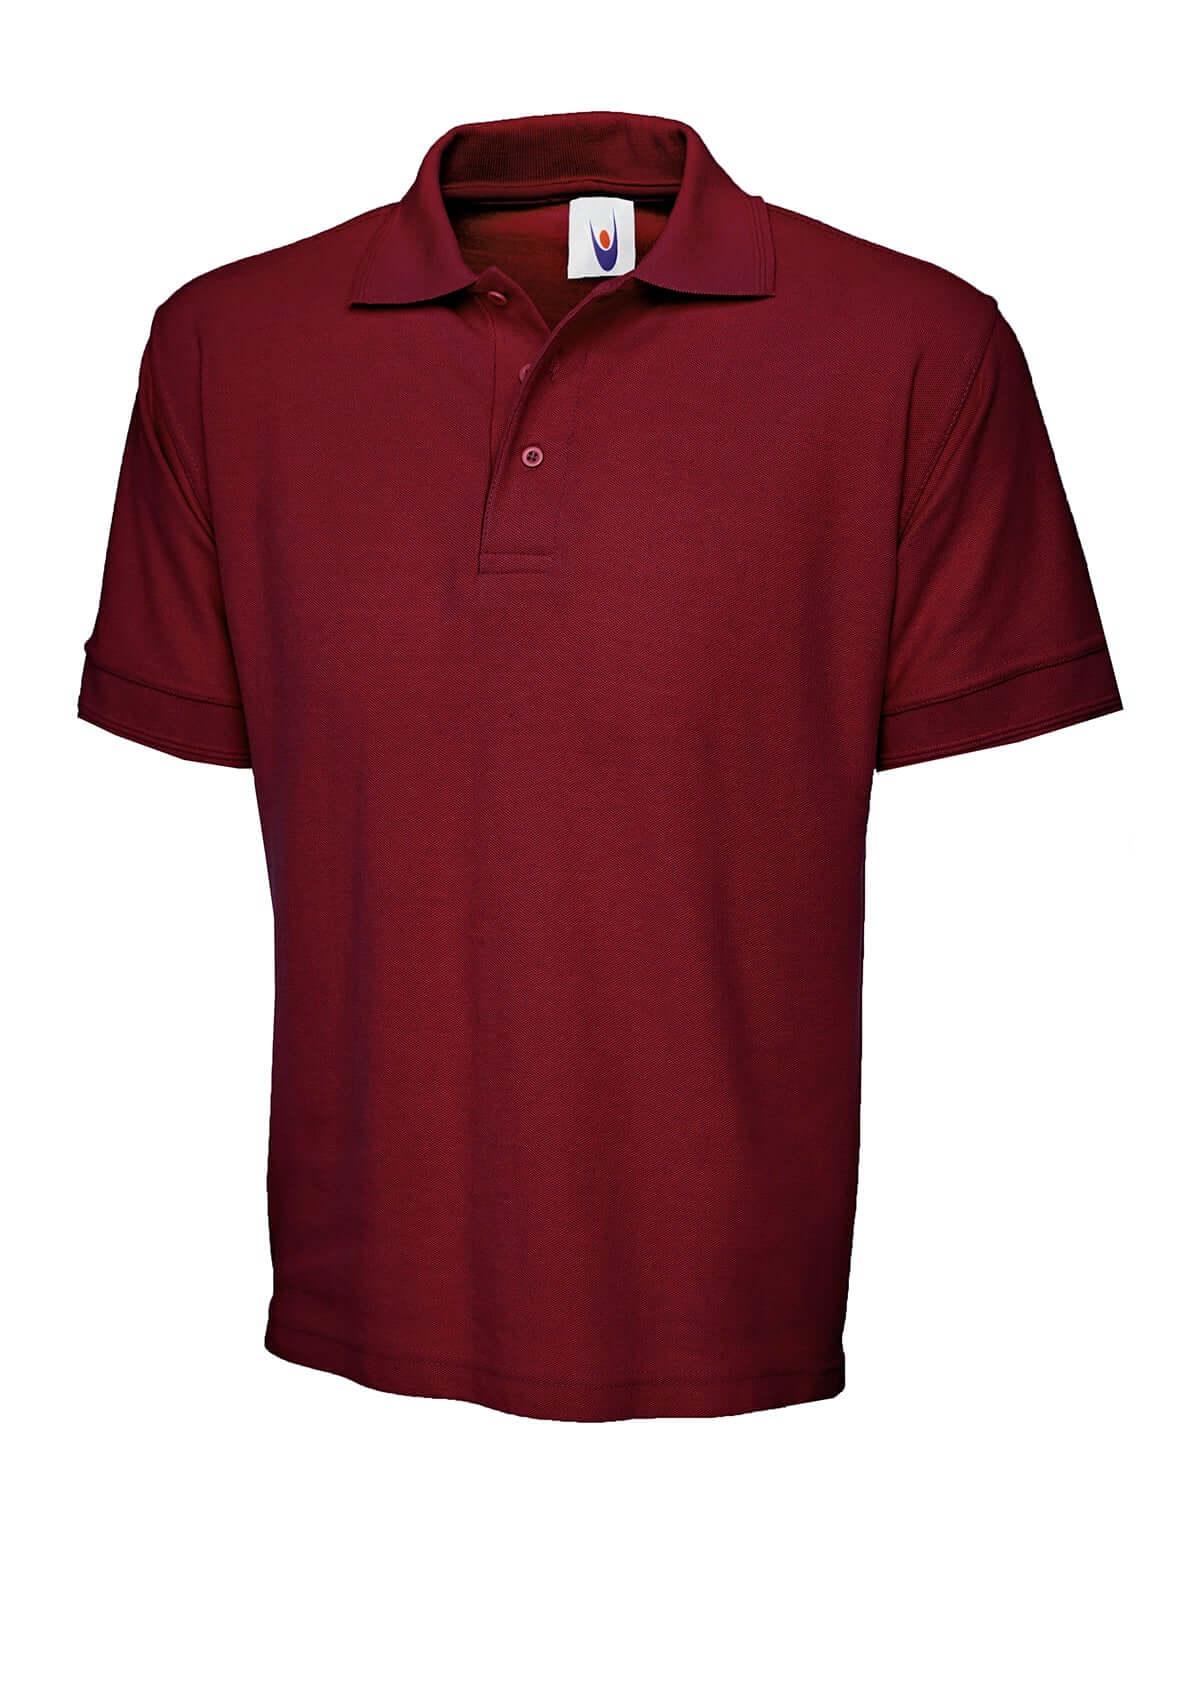 Pegasus Uniform Premium Unisex Polo Shirt - Maroon